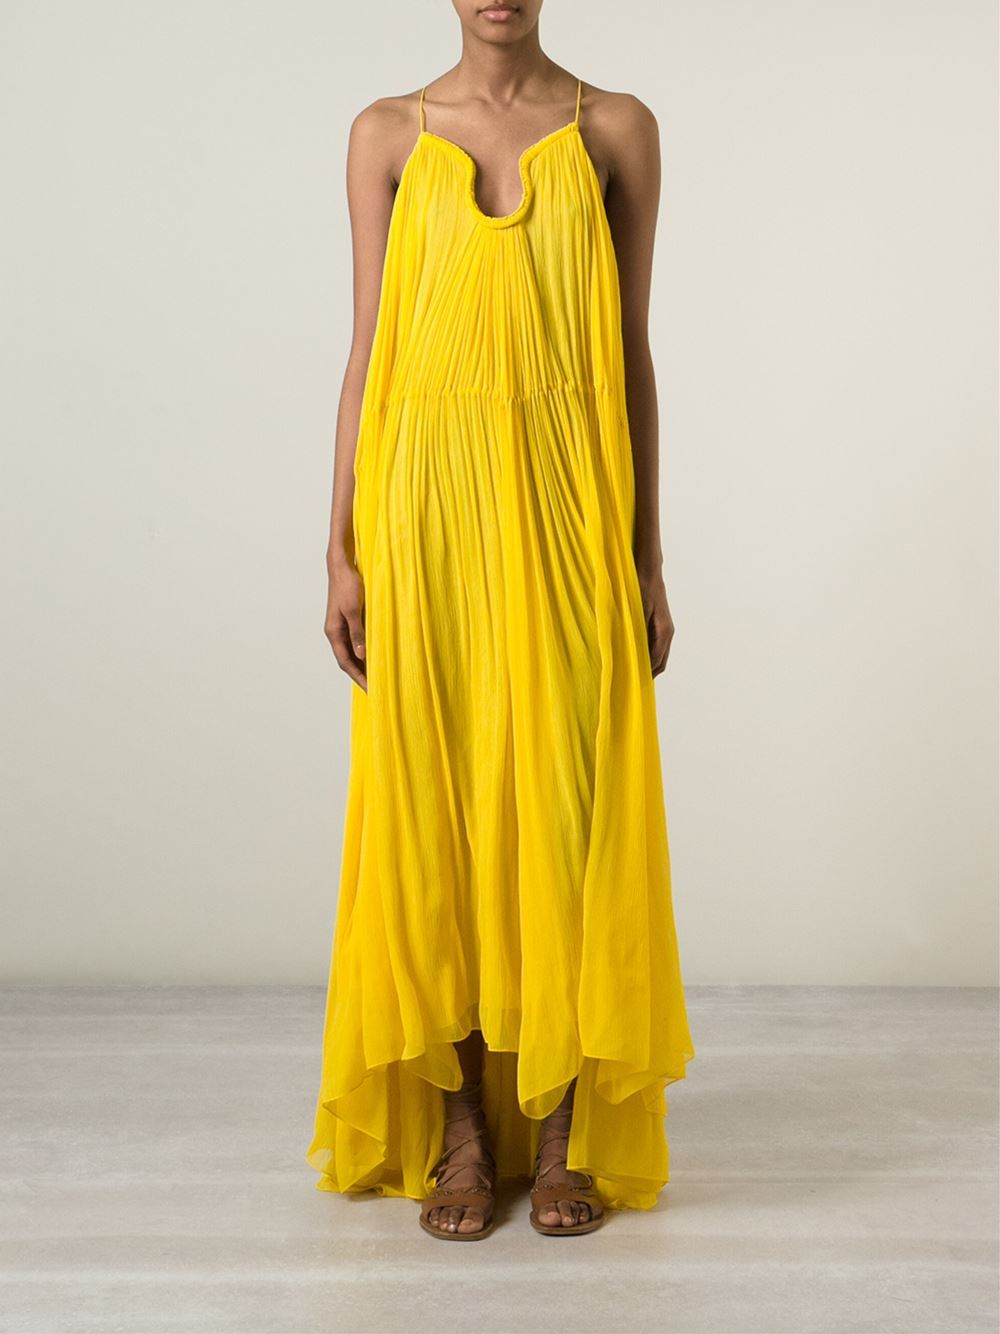 Chloé yellow full length draped dress - AvenueSixty